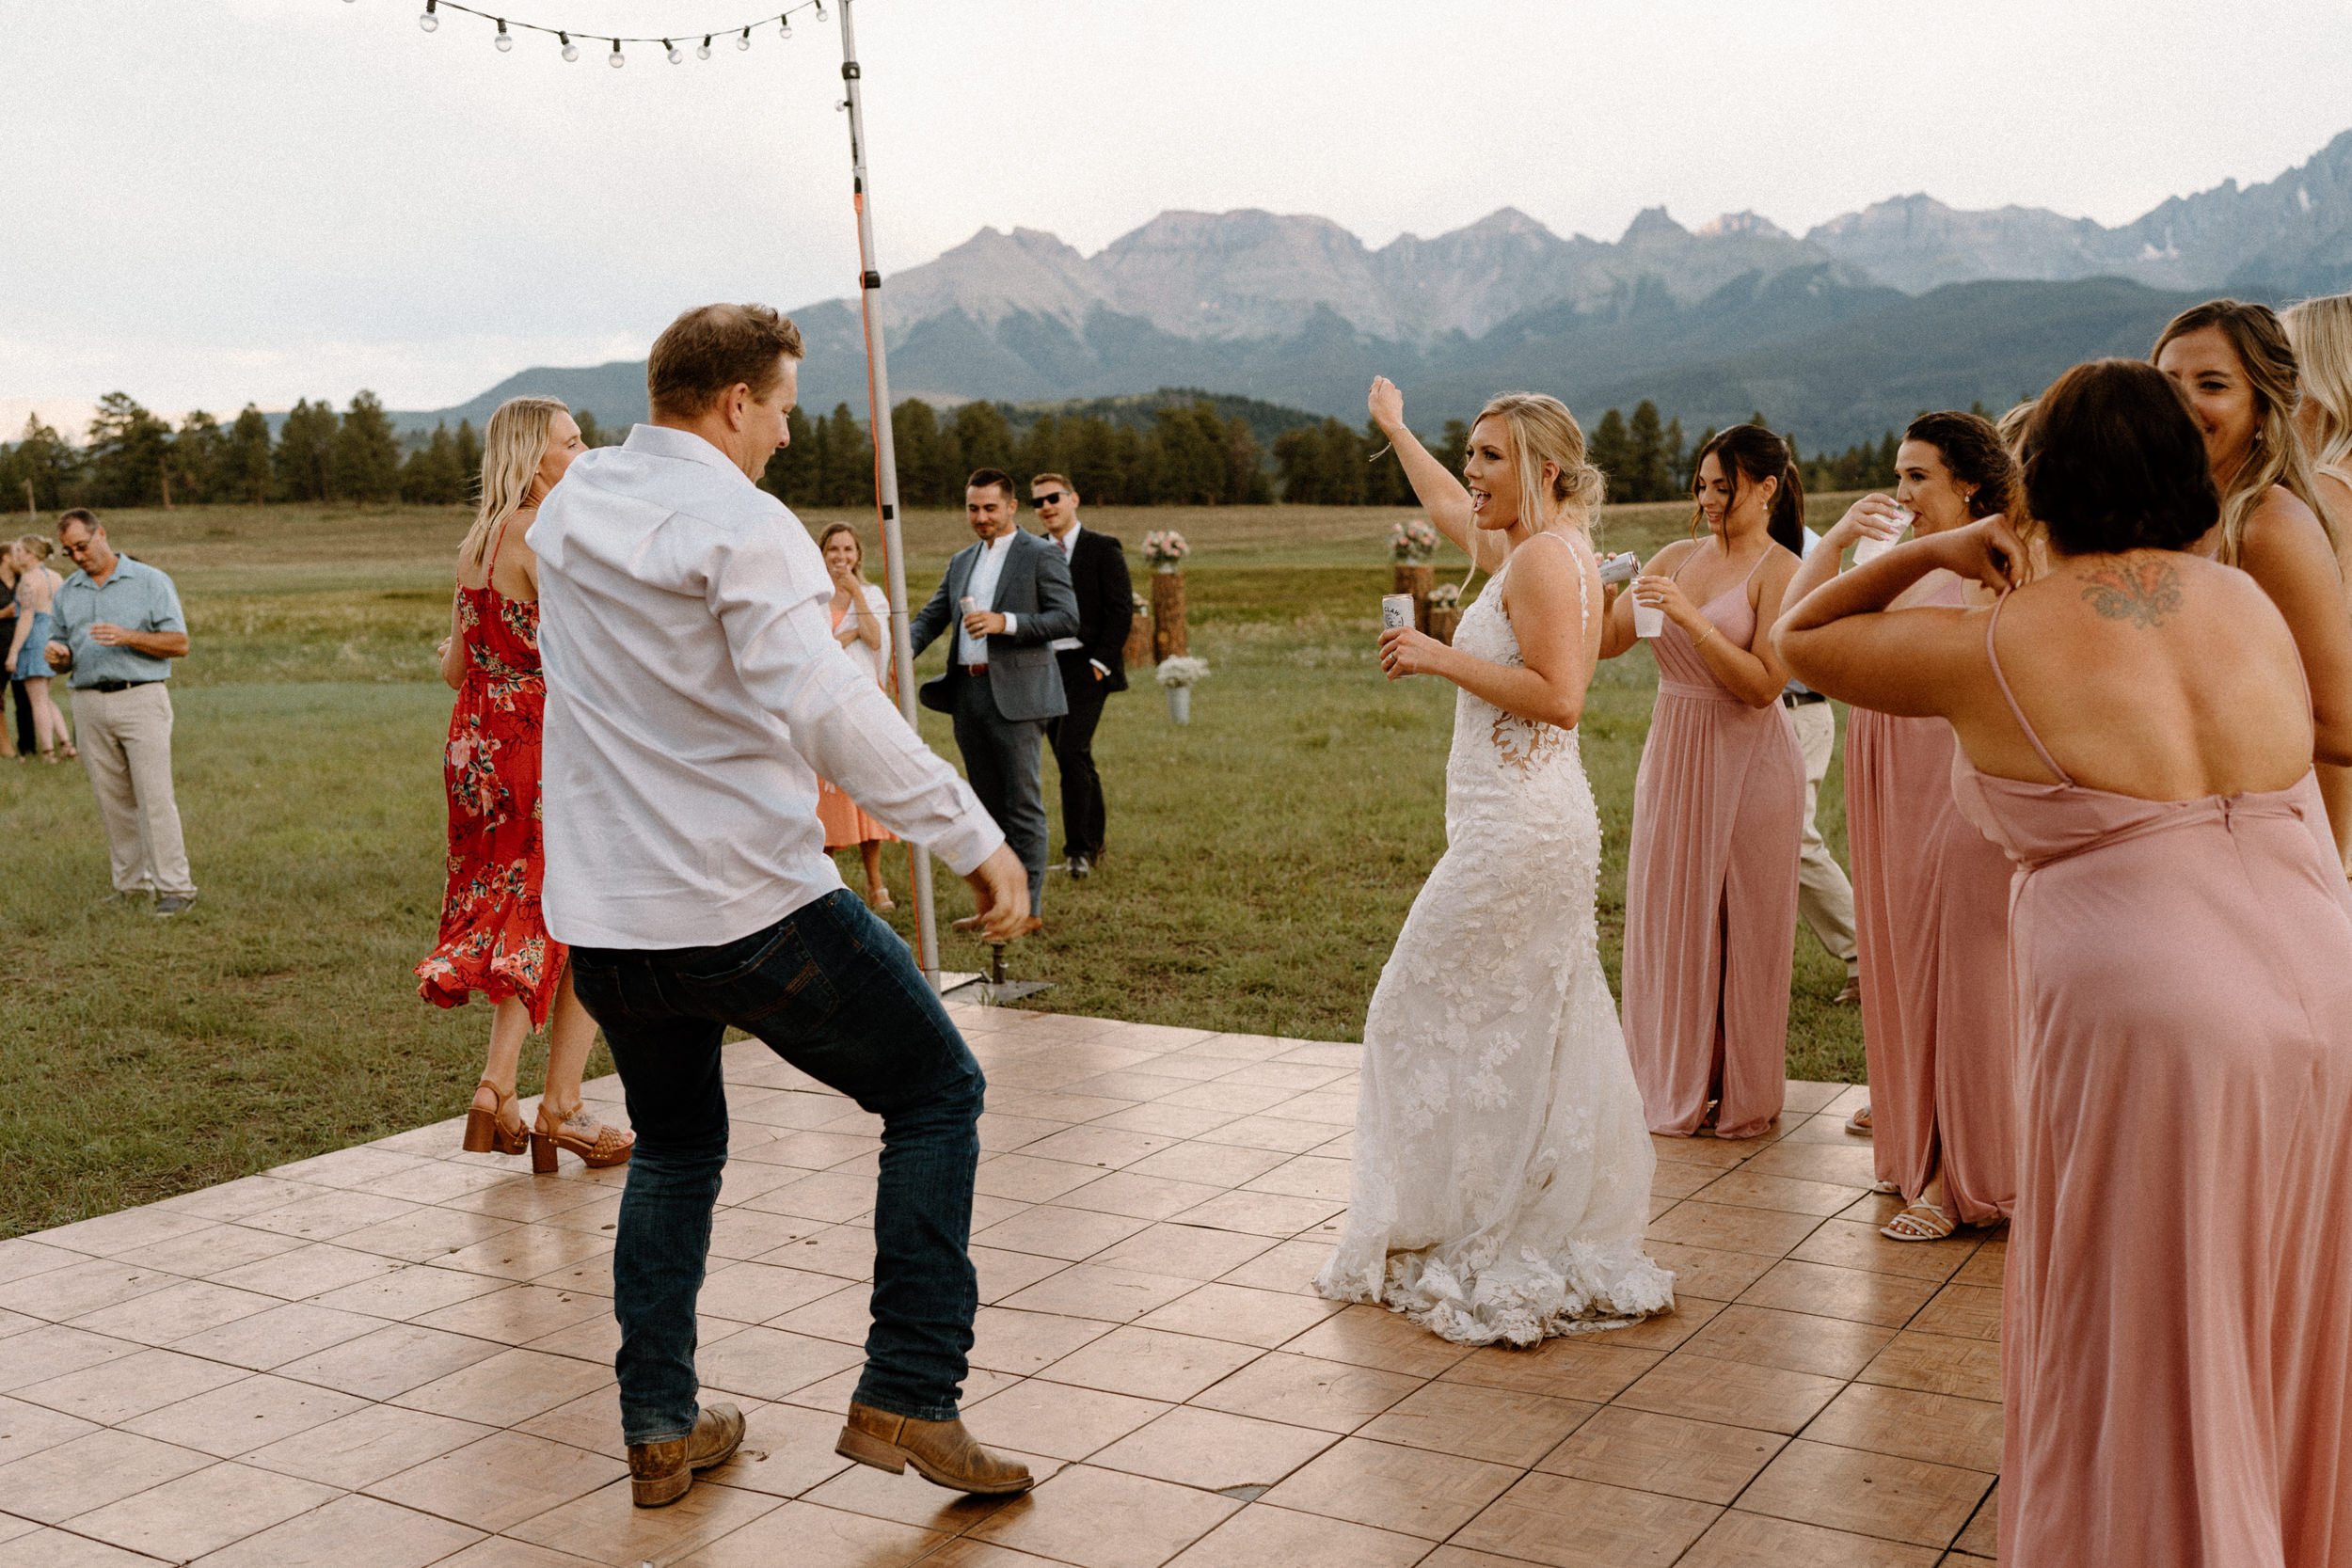 Bride dances with guests on the dance floor